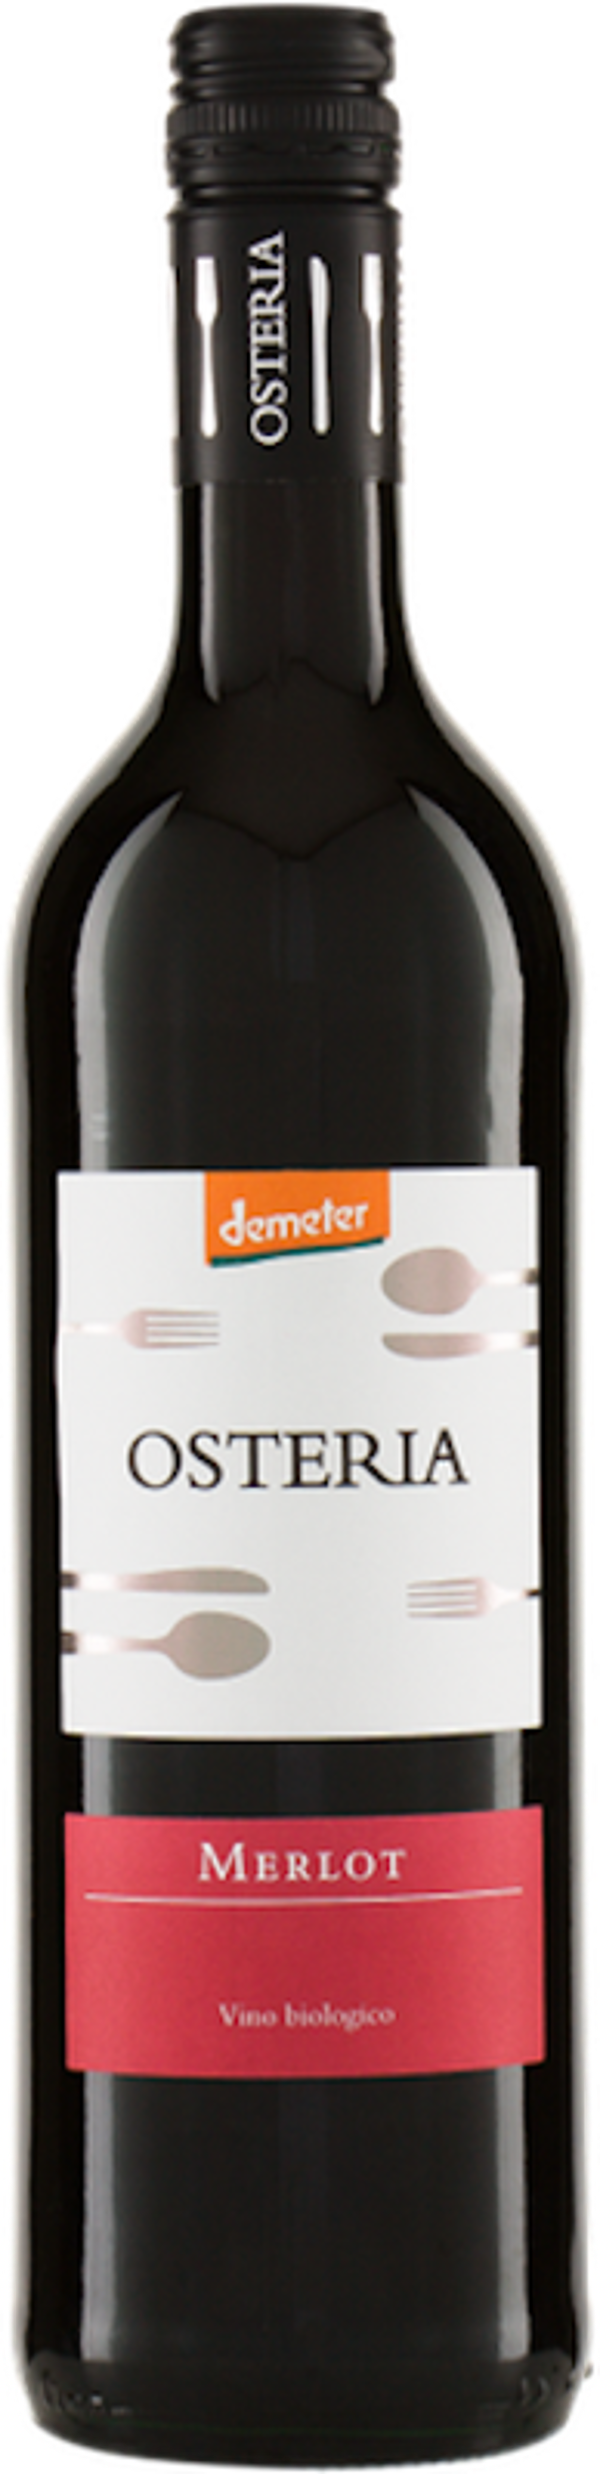 Produktfoto zu Osteria Merlot  Demeter